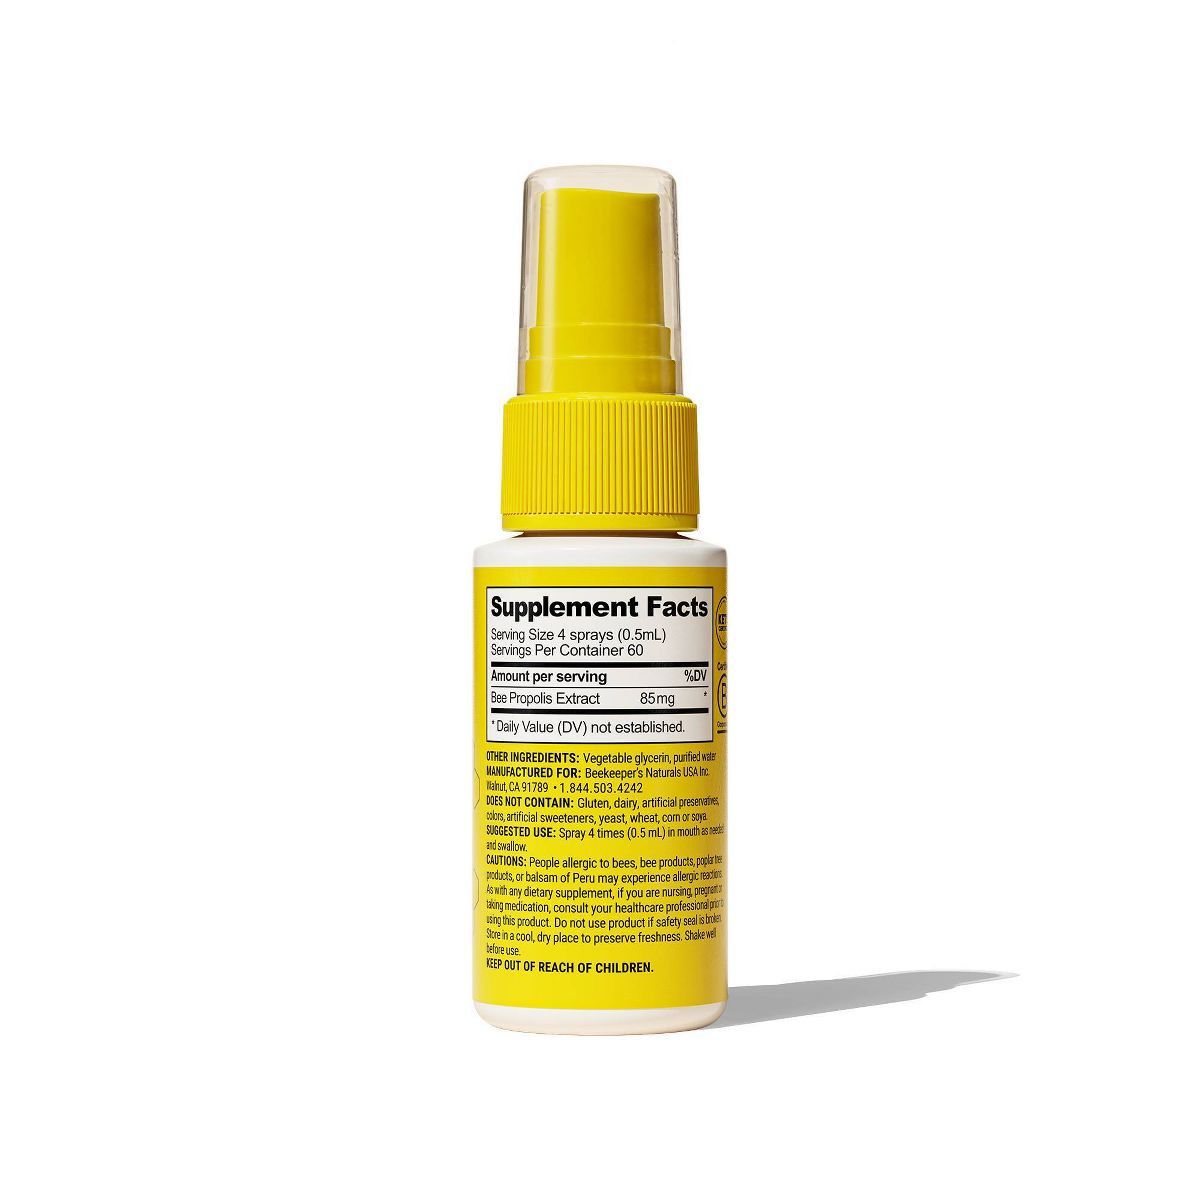 Beekeeper's Naturals Propolis Immune Support Throat Spray - 1.06 fl oz | Target